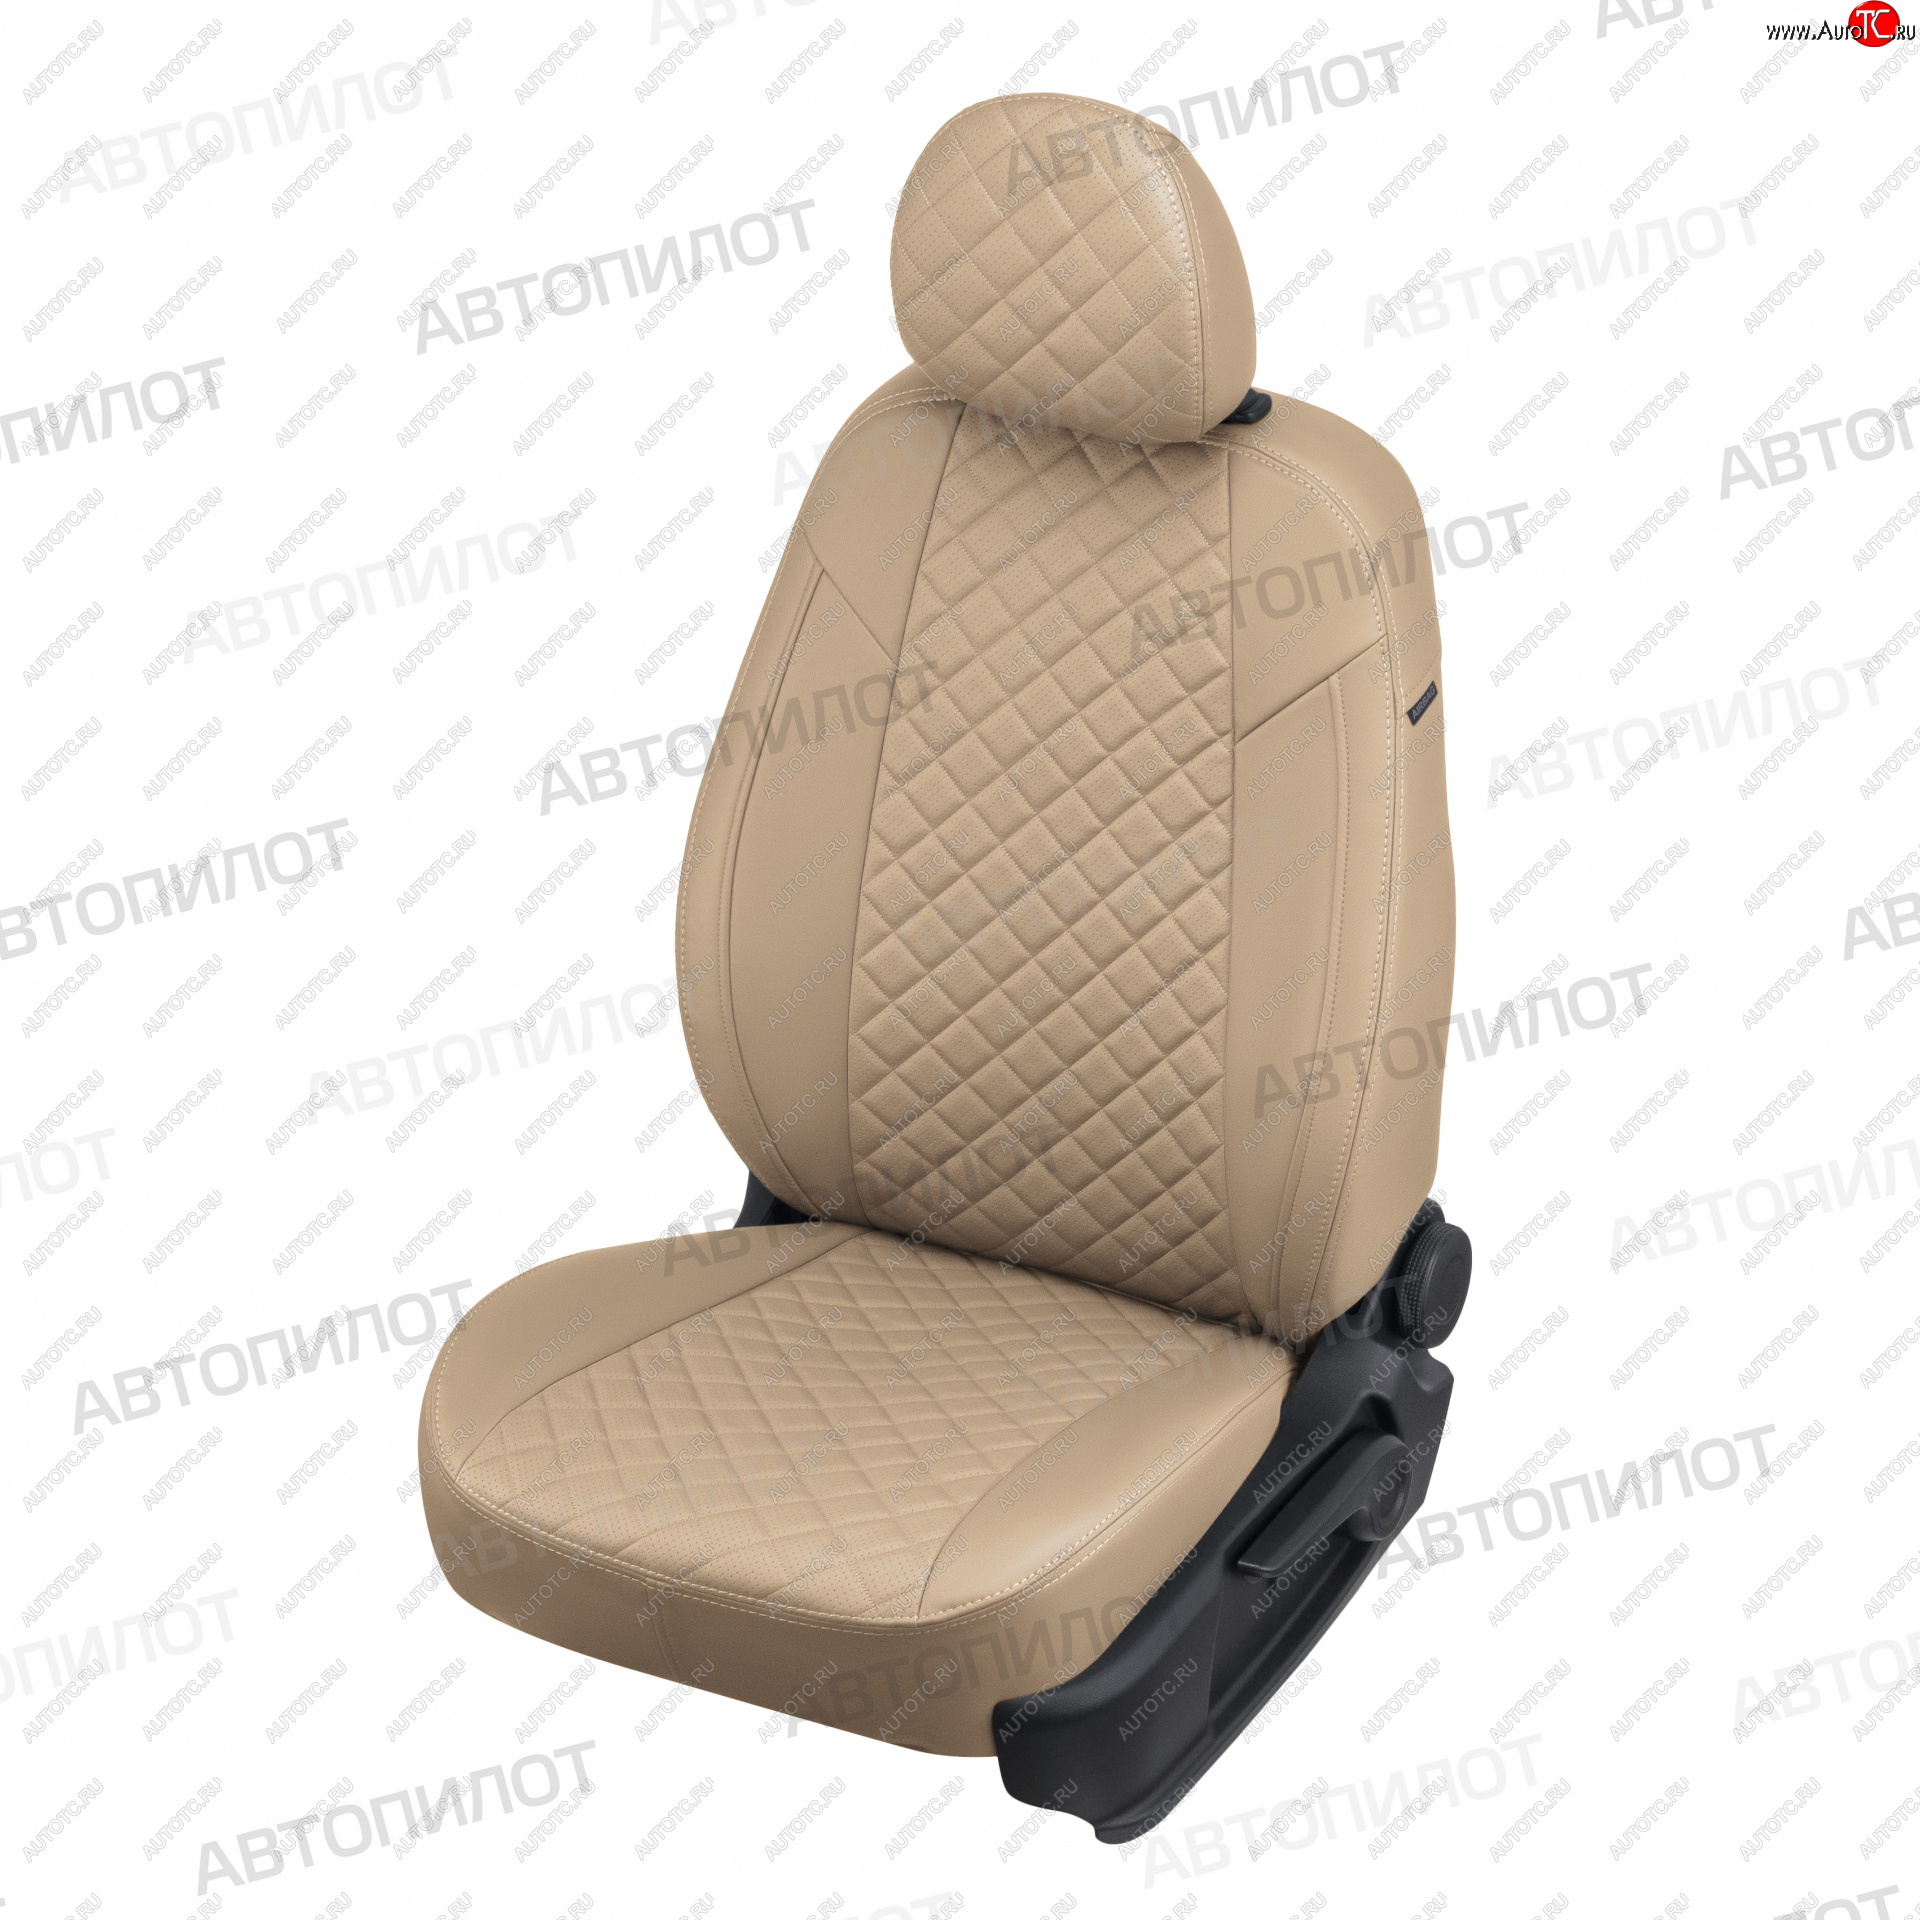 22 299 р. Чехлы сидений (9 мест, экокожа) Автопилот Ромб  Ford Transit  4 (2014-2021) (темно-бежевый)